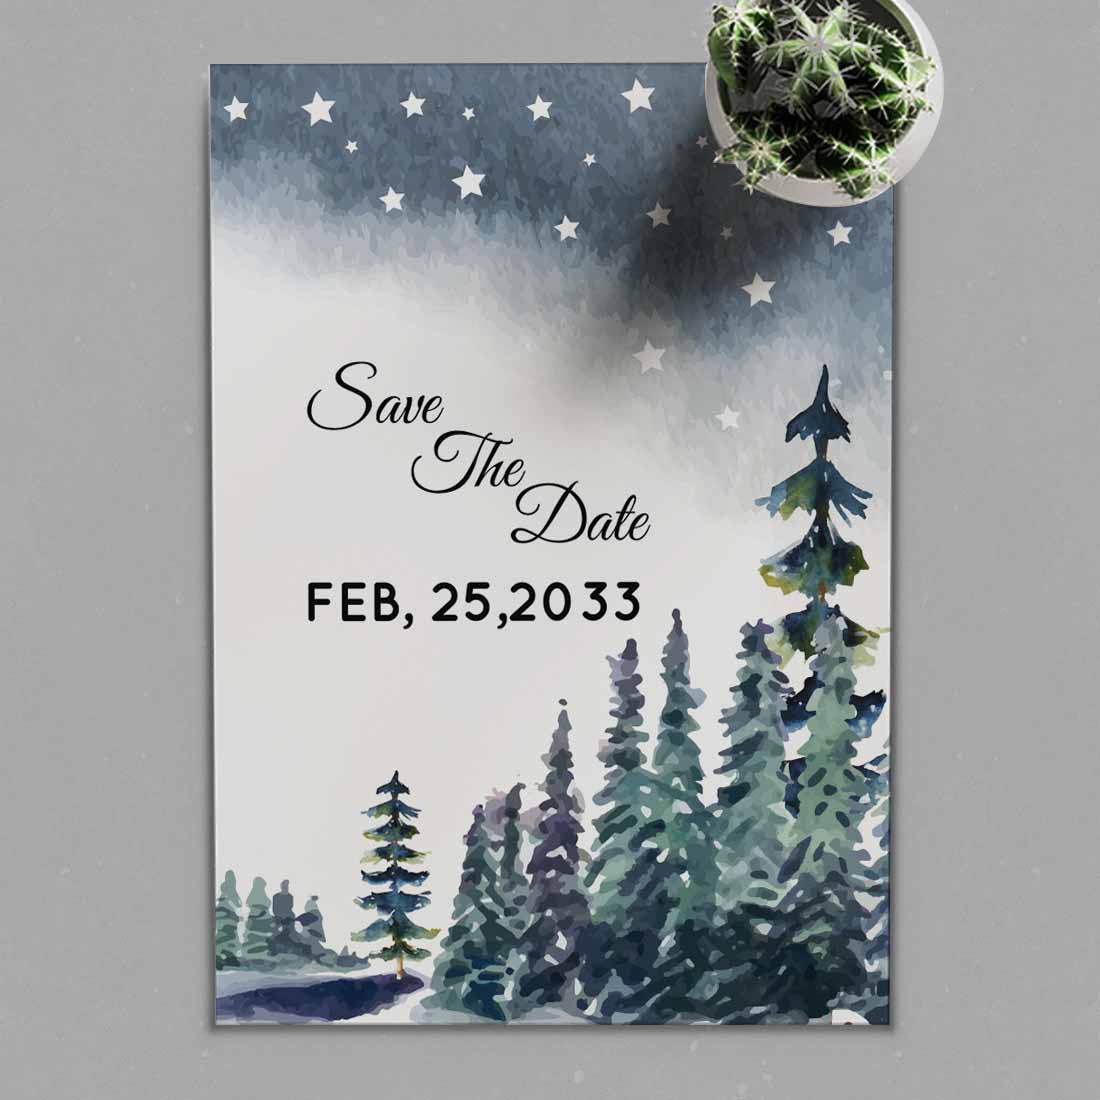 Wonderland Winter Wedding Card Template cover image.